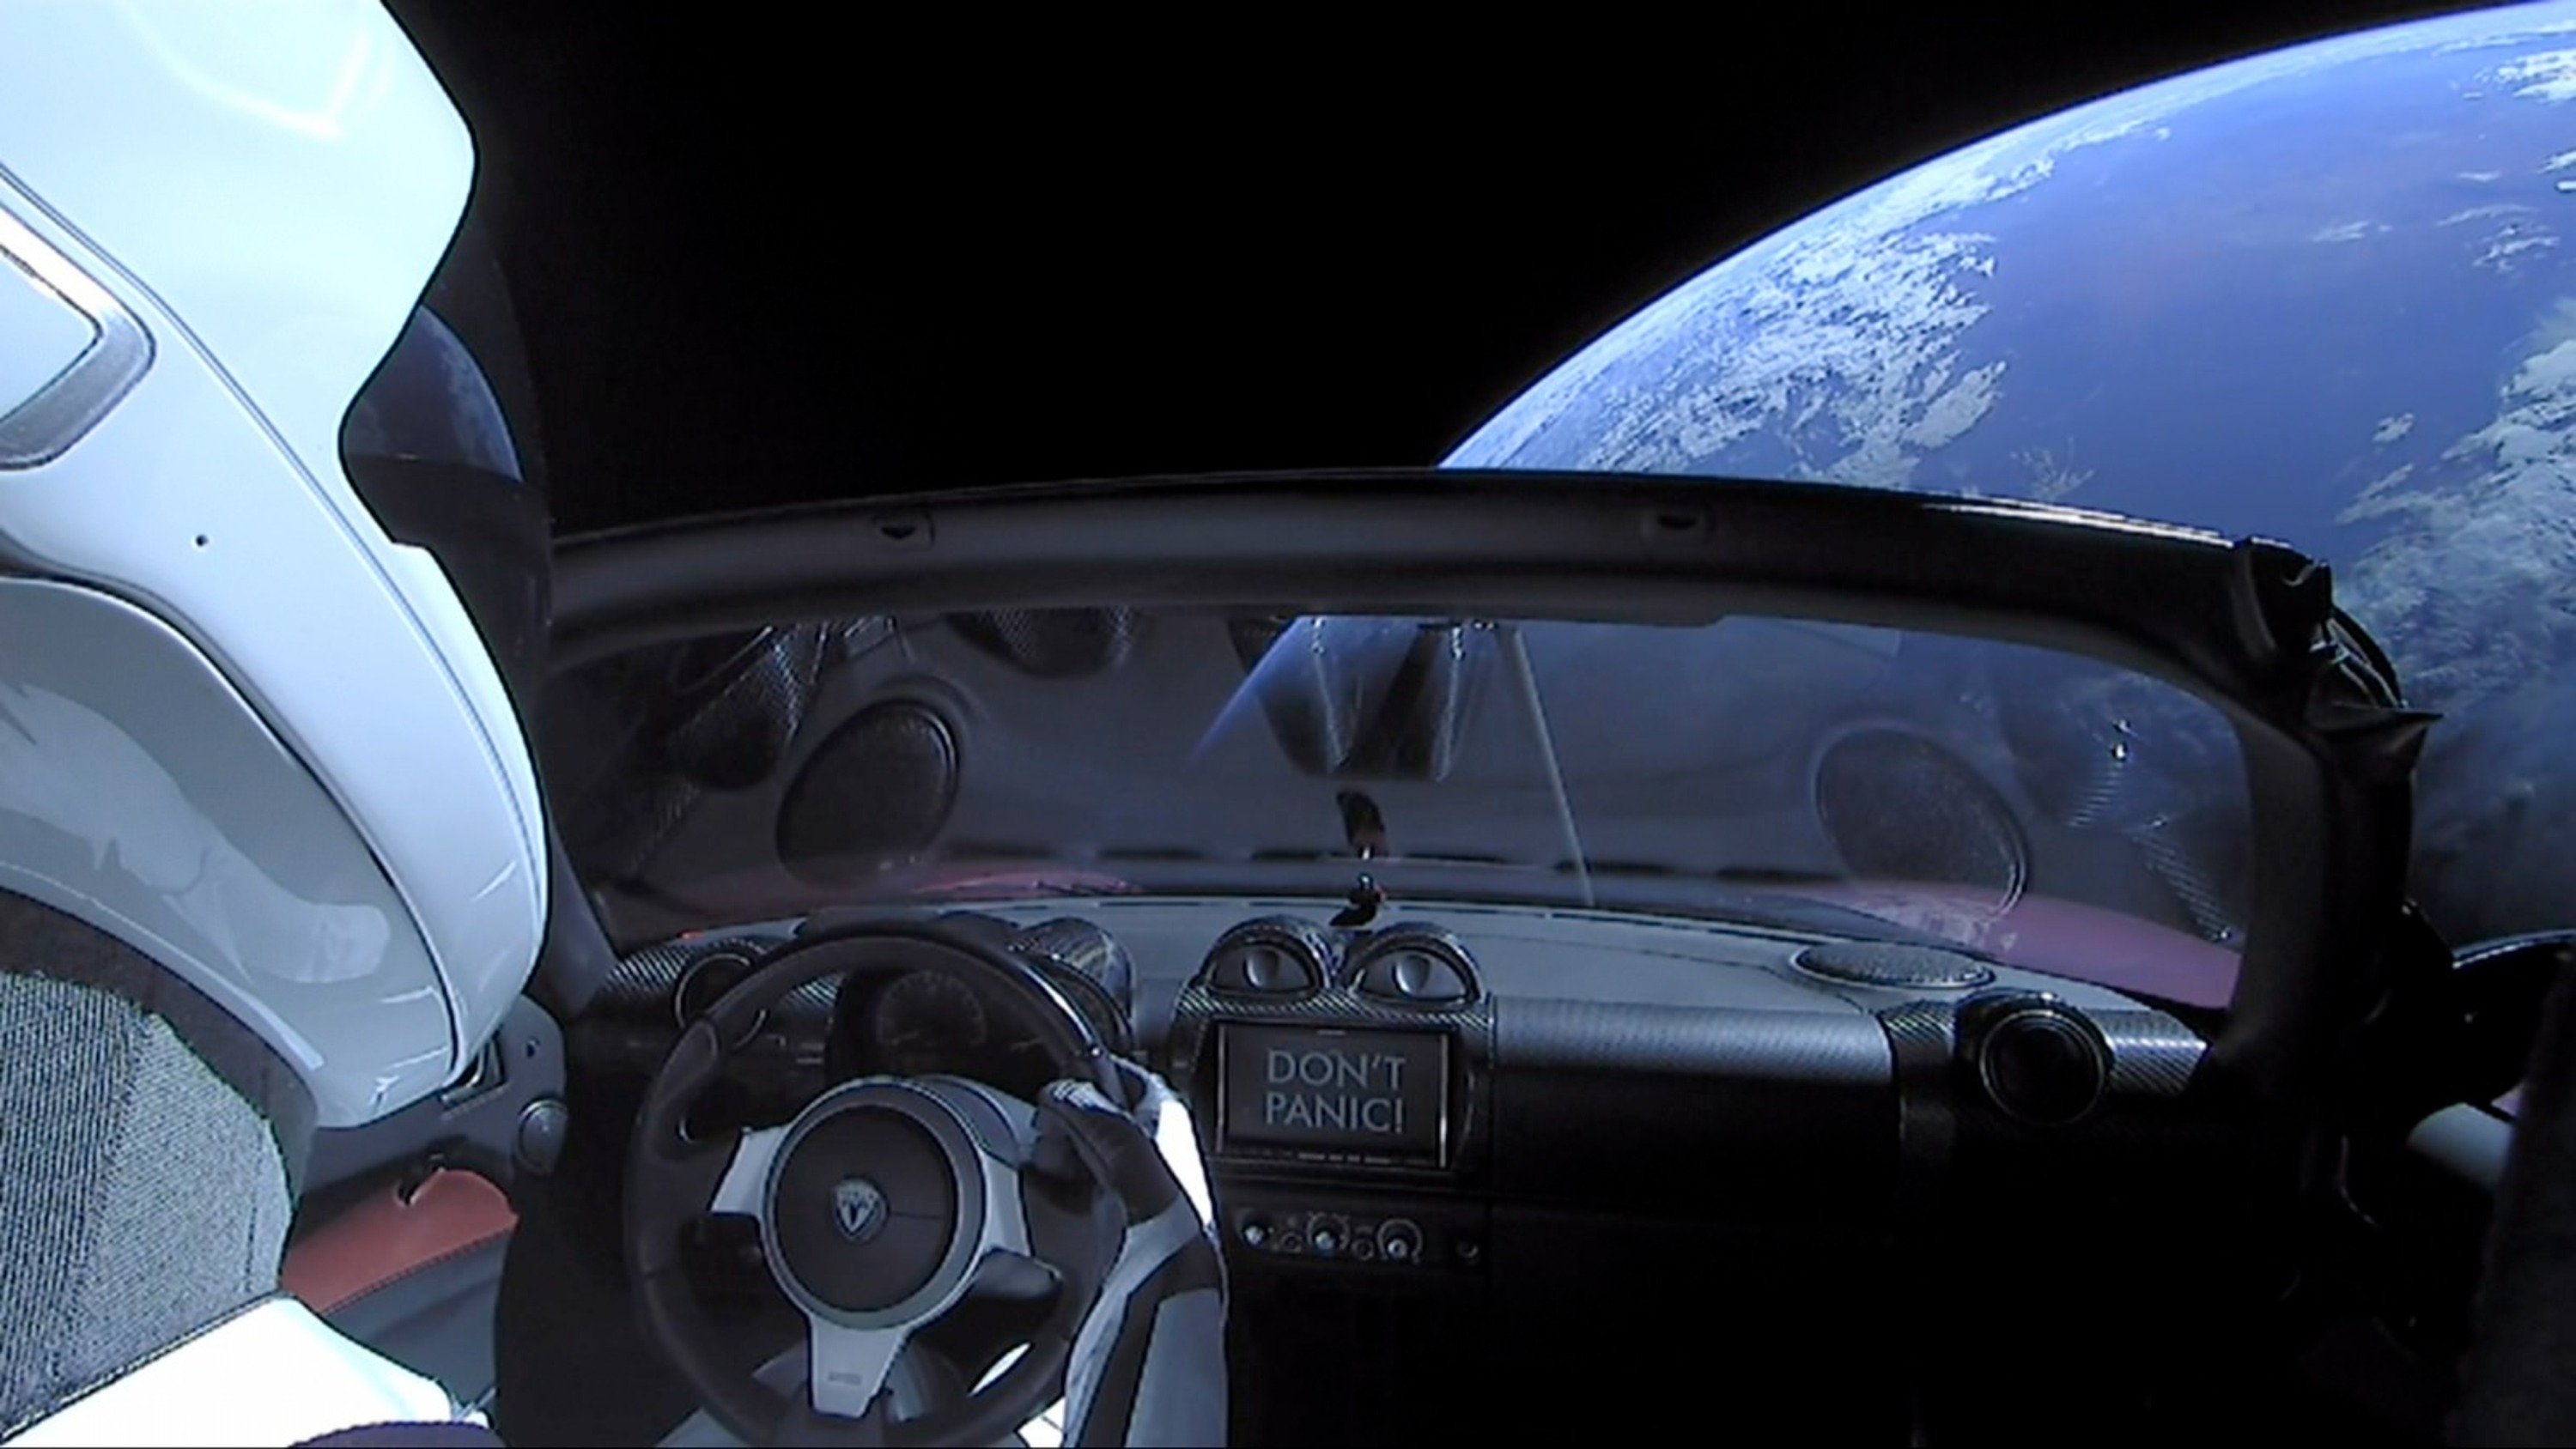 La Tesla Roadster di SpaceX supera Marte